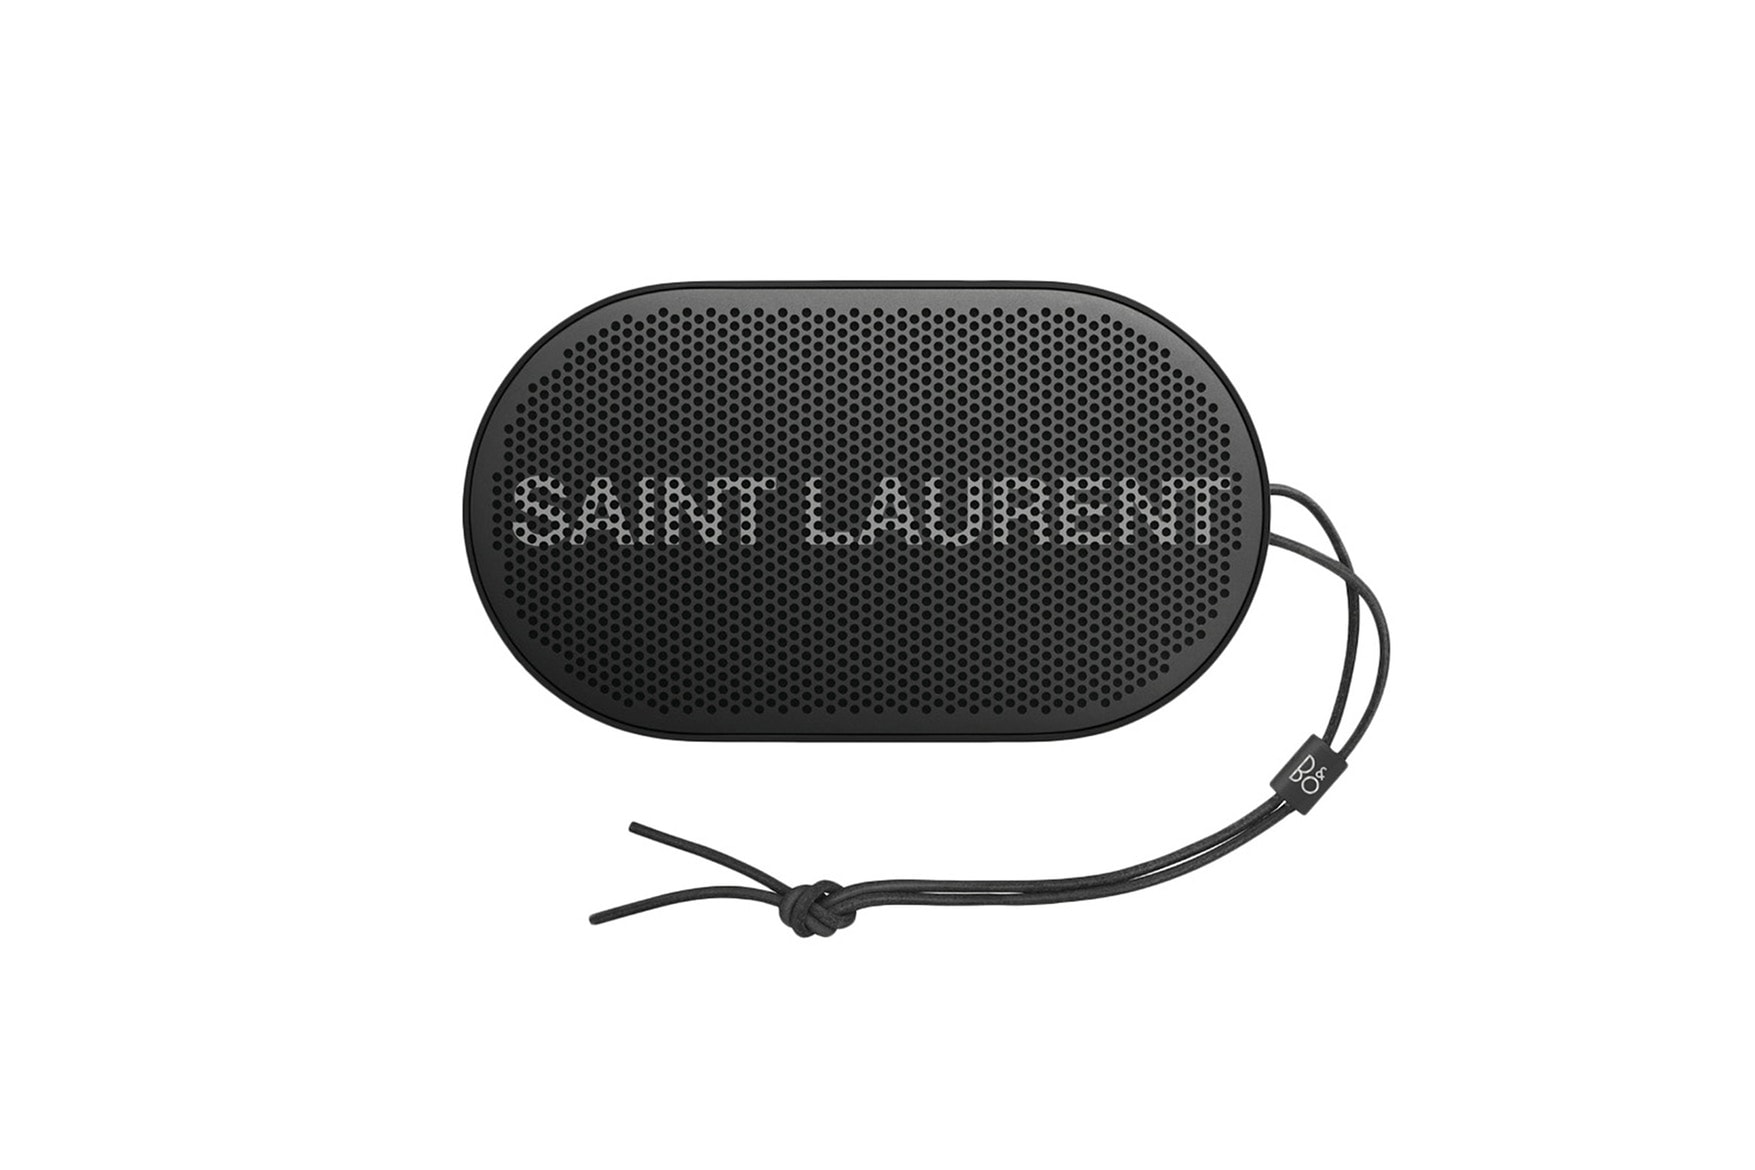 結業倒計時 - Saint Laurent x colette 全新聯名系列完整公開